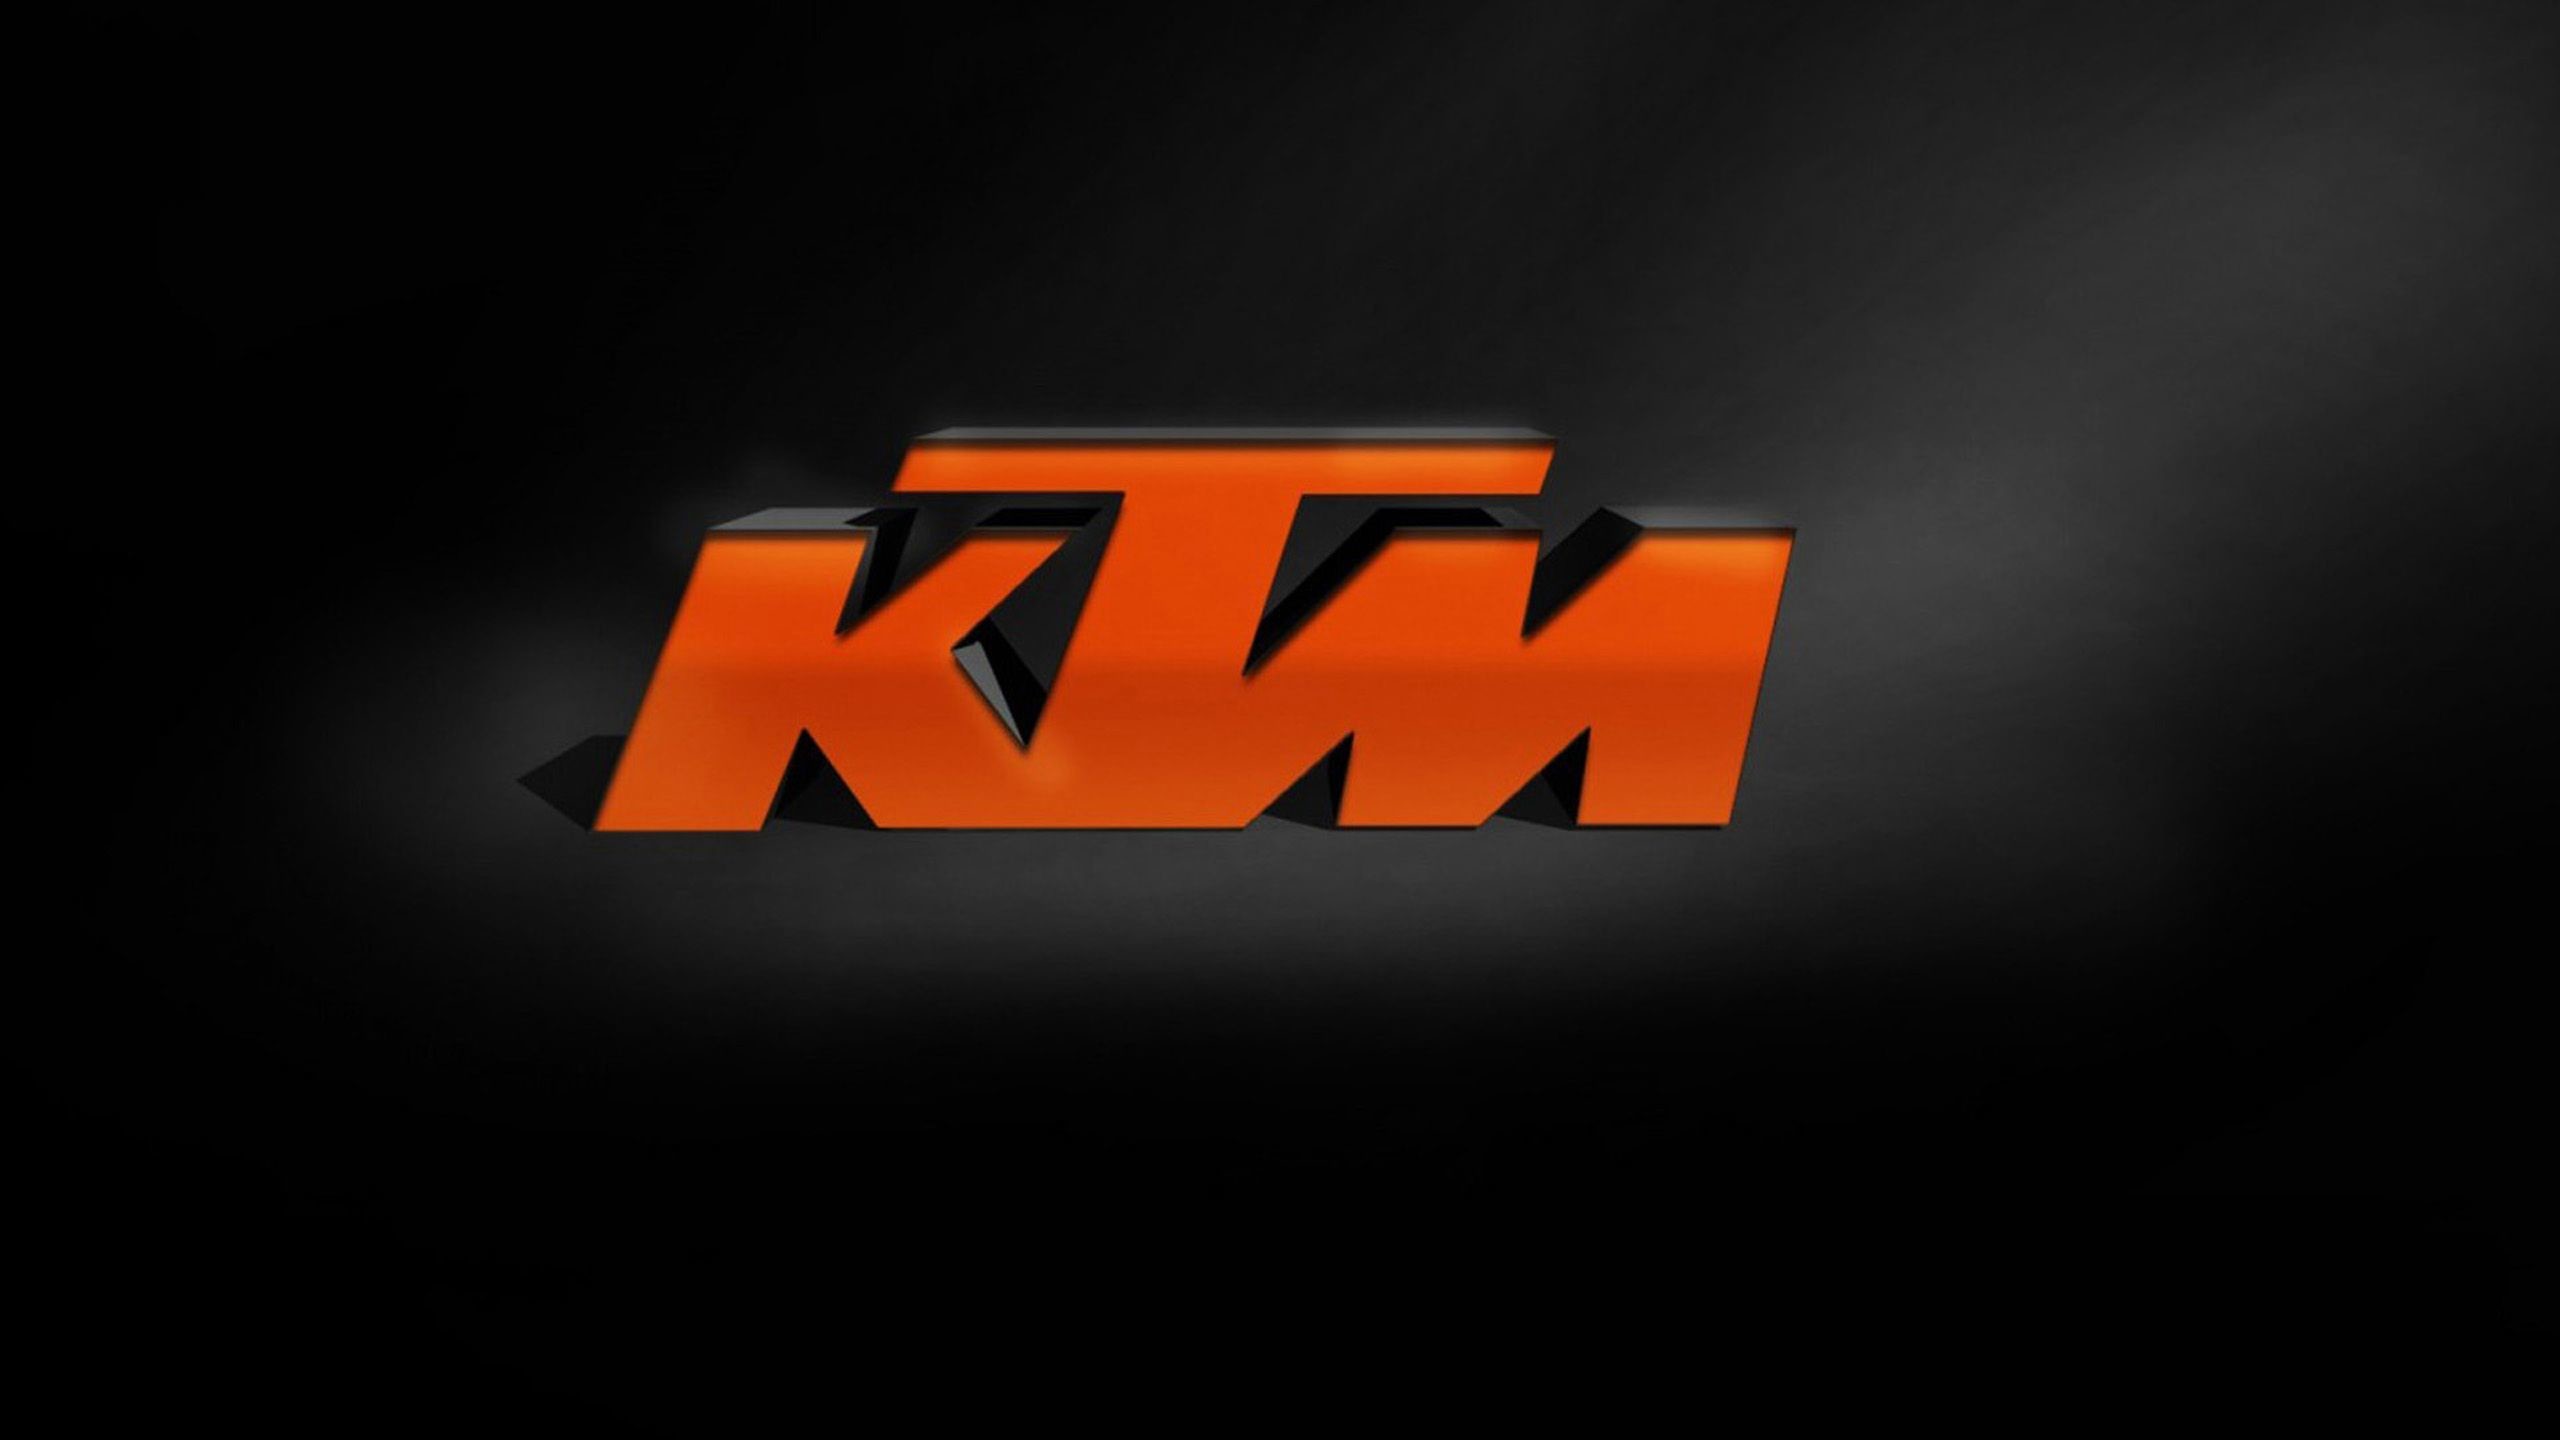 2560x1440 KTM Logo Wallpaper - WallpaperSafari